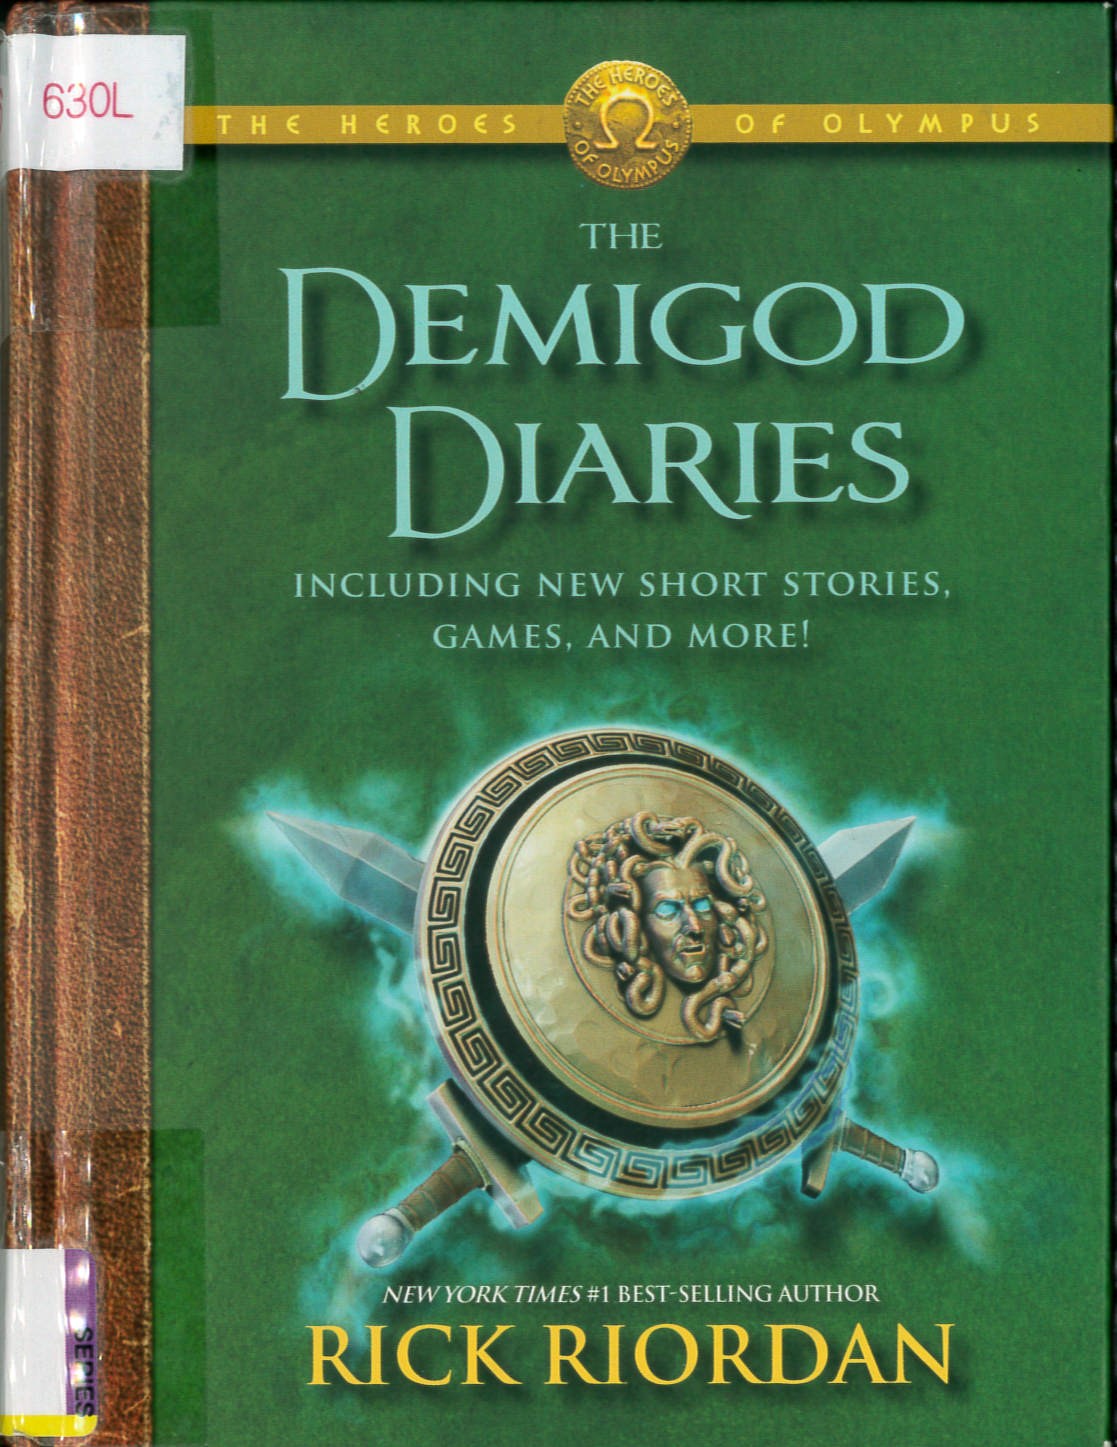 The demigod diaries /